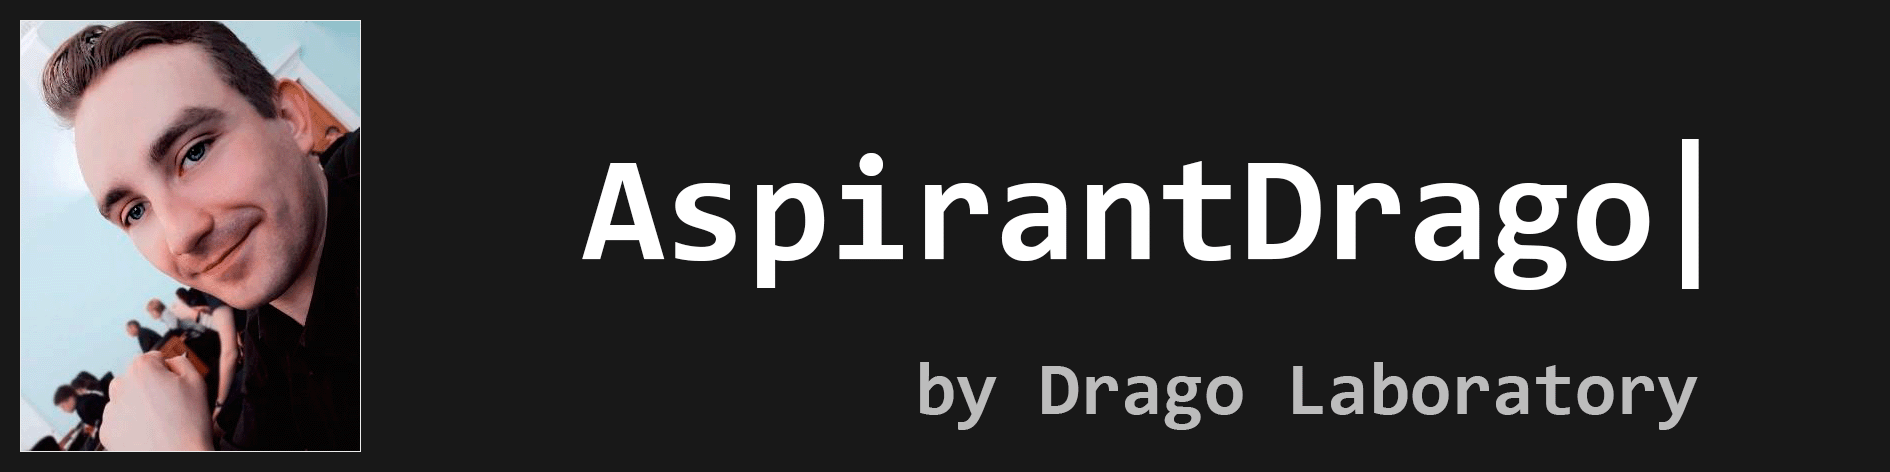 AspirantDrago <br />by Drago Laboratory